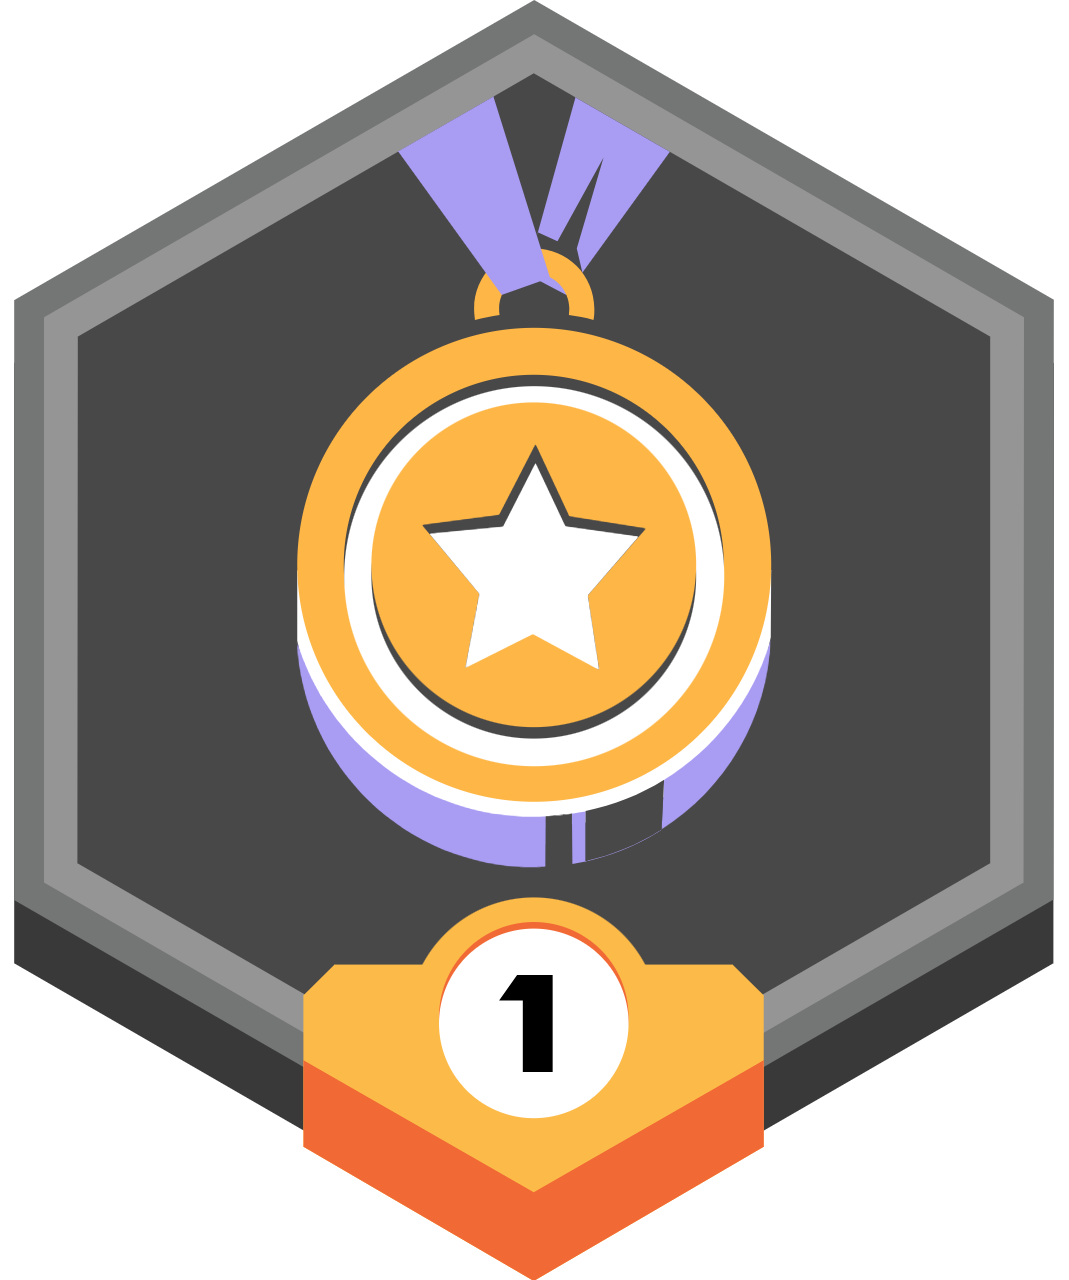 Prusa "Star of Design Level 1" Badge Keychain